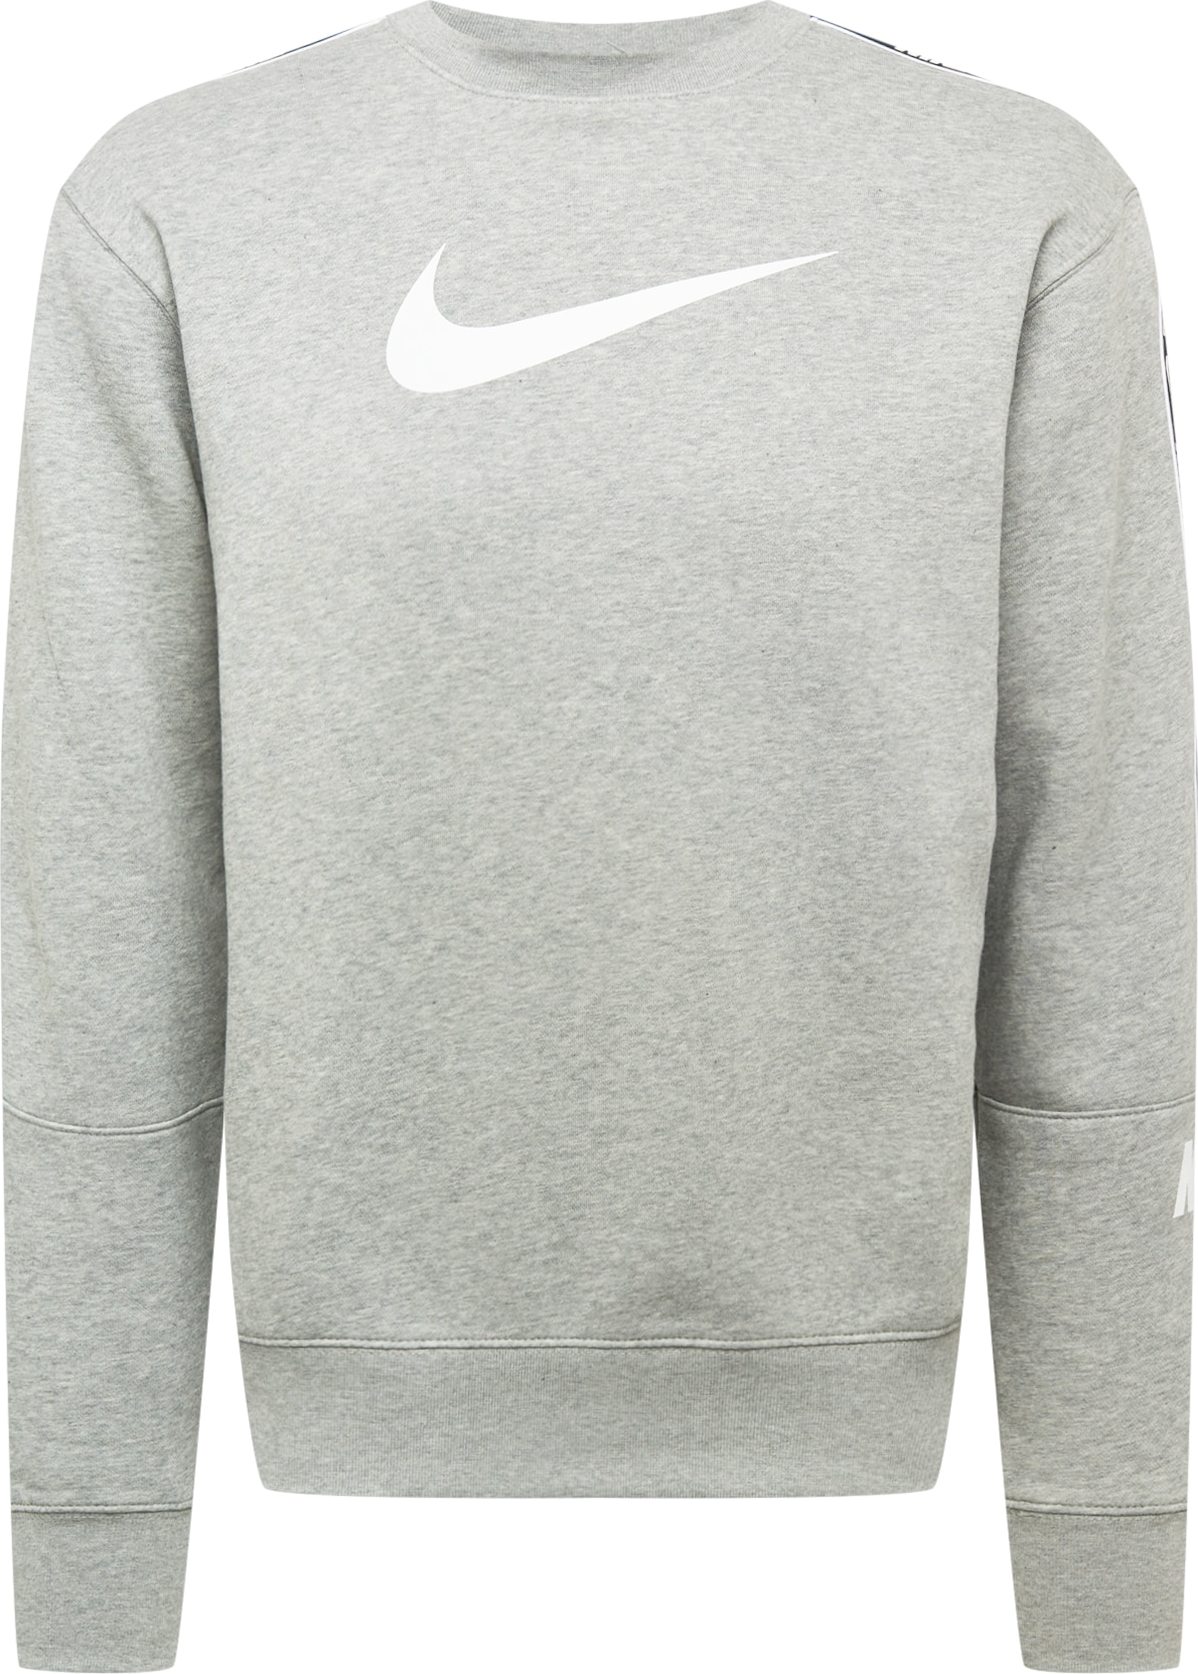 Nike Sportswear Mikina 'REPEAT' šedý melír / bílá